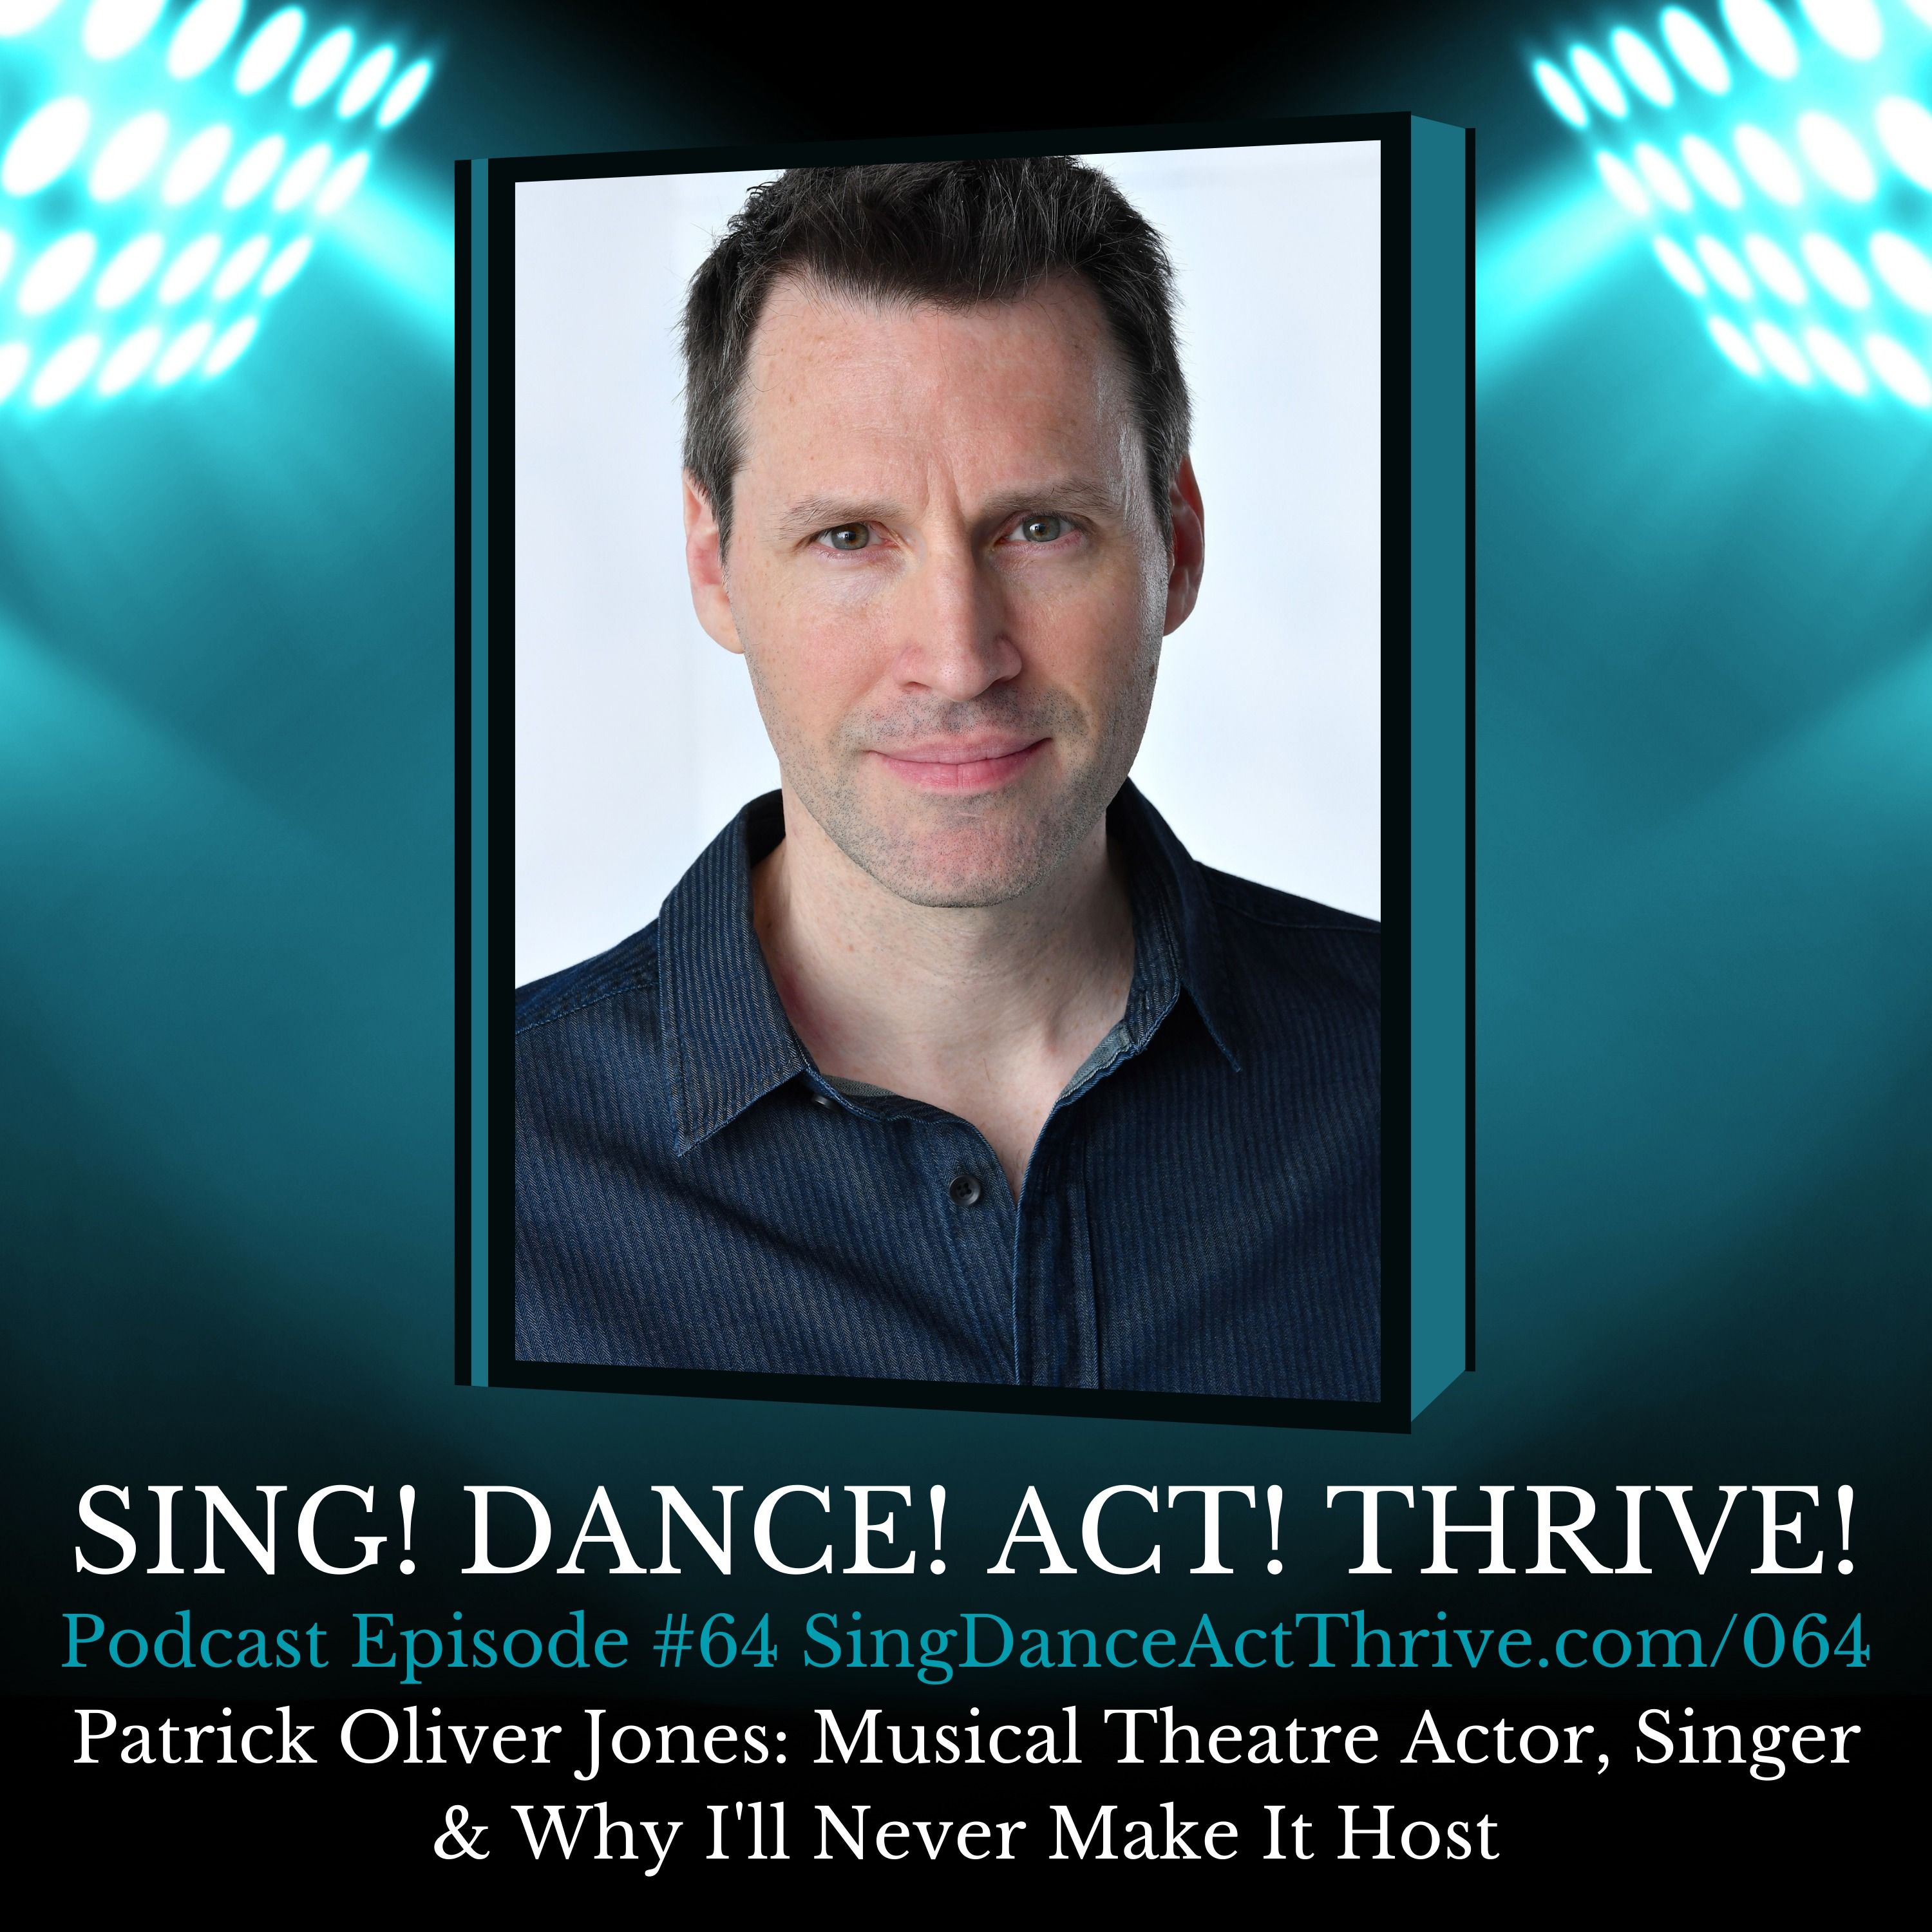 Patrick Oliver Jones: Musical Theatre Actor, Singer & Why I’ll Never Make It Host